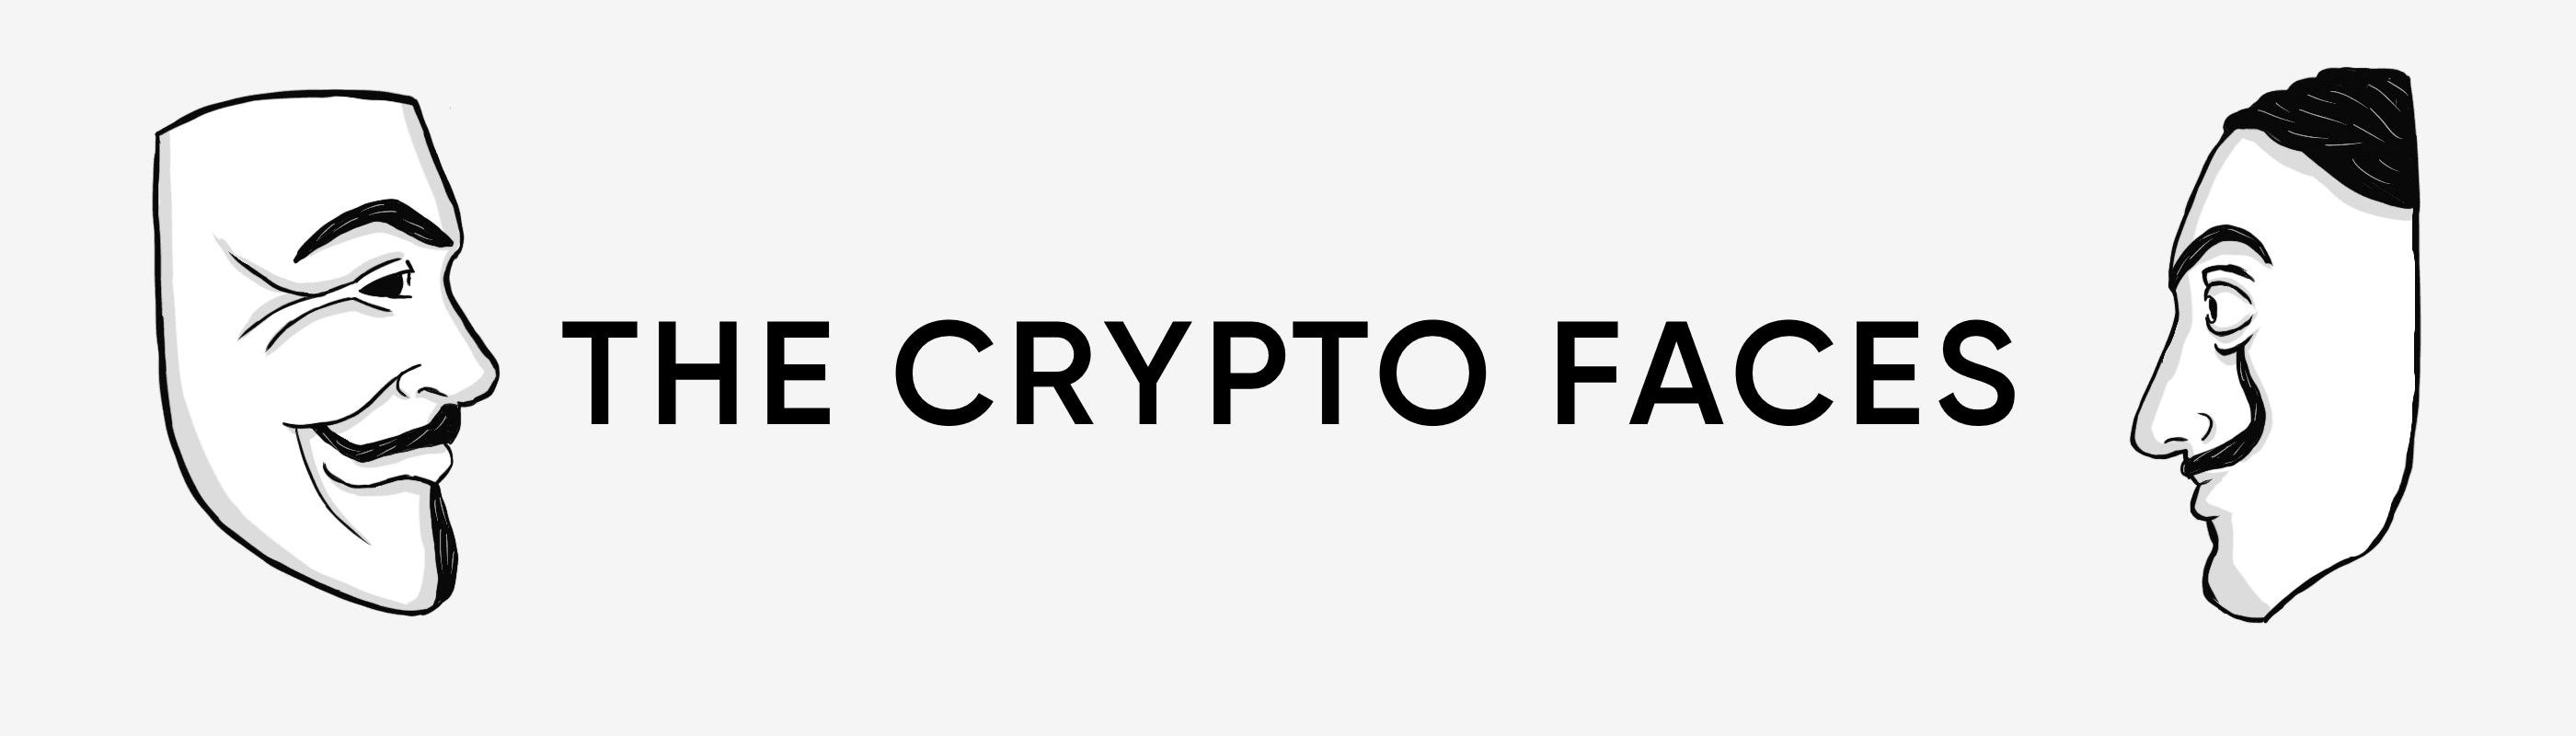 thecryptofaces banner